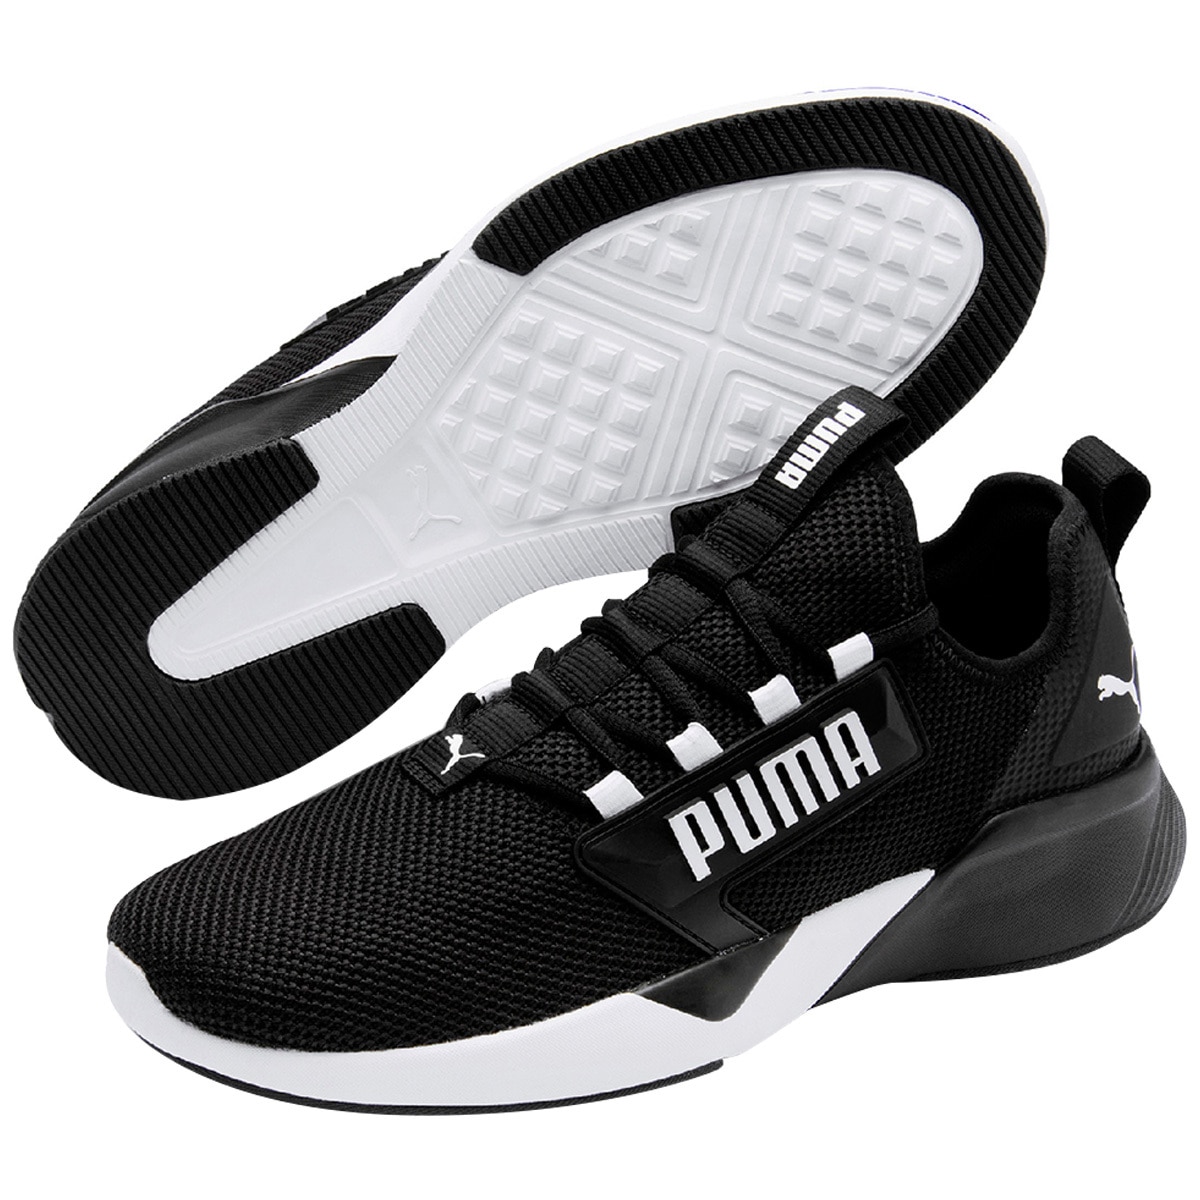 Puma Retaliate shoe - Black